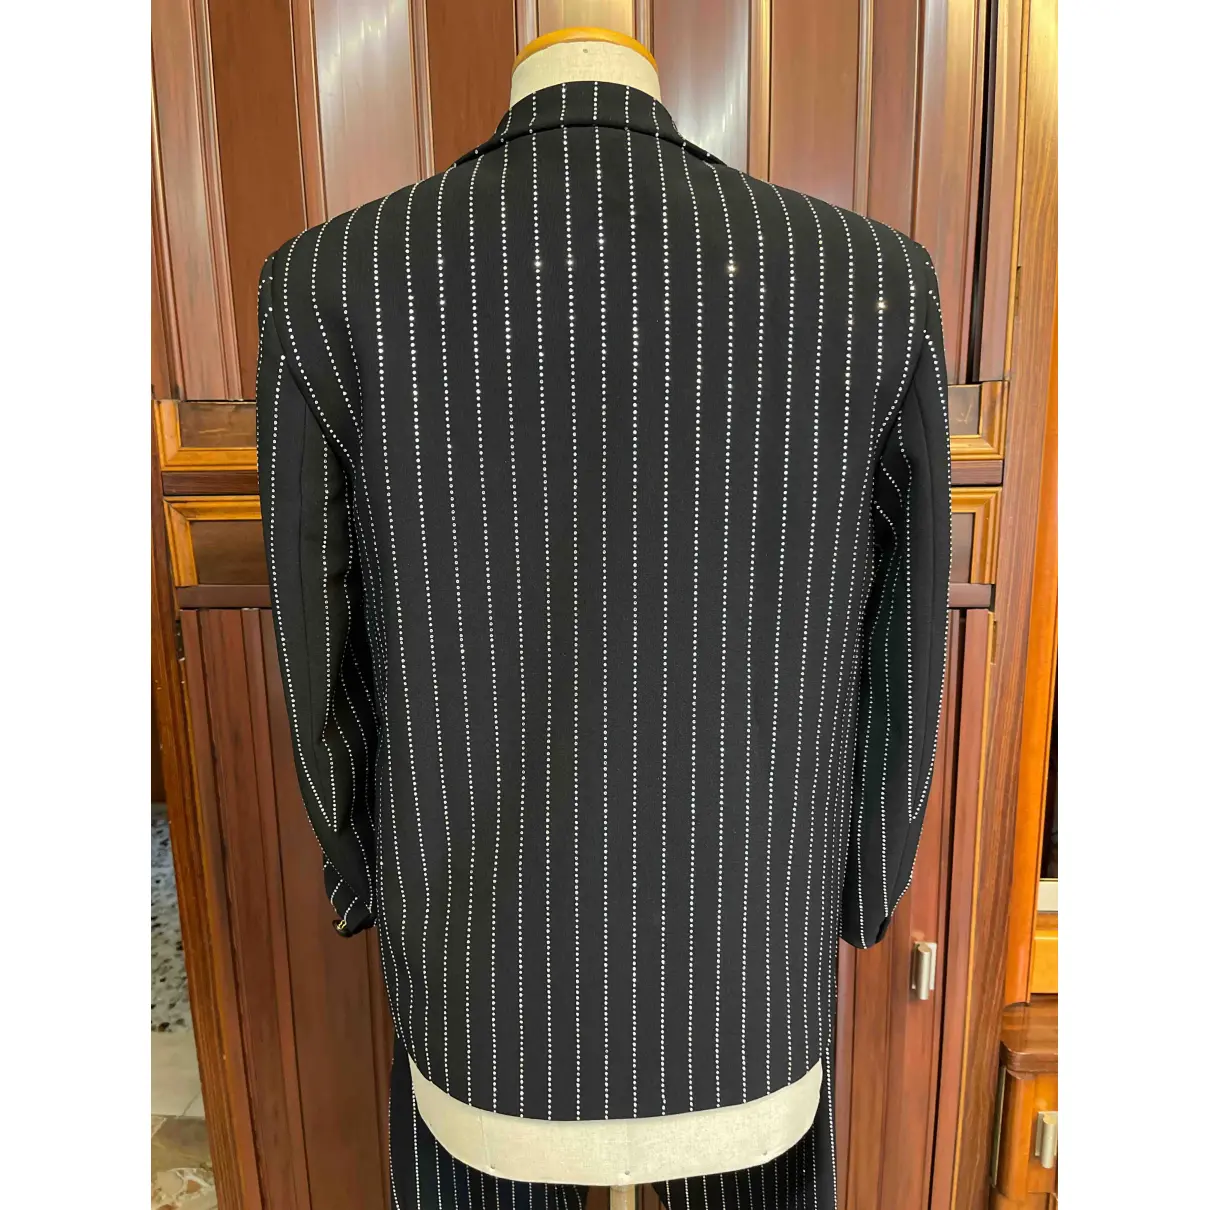 Buy Marco Bologna Suit jacket online